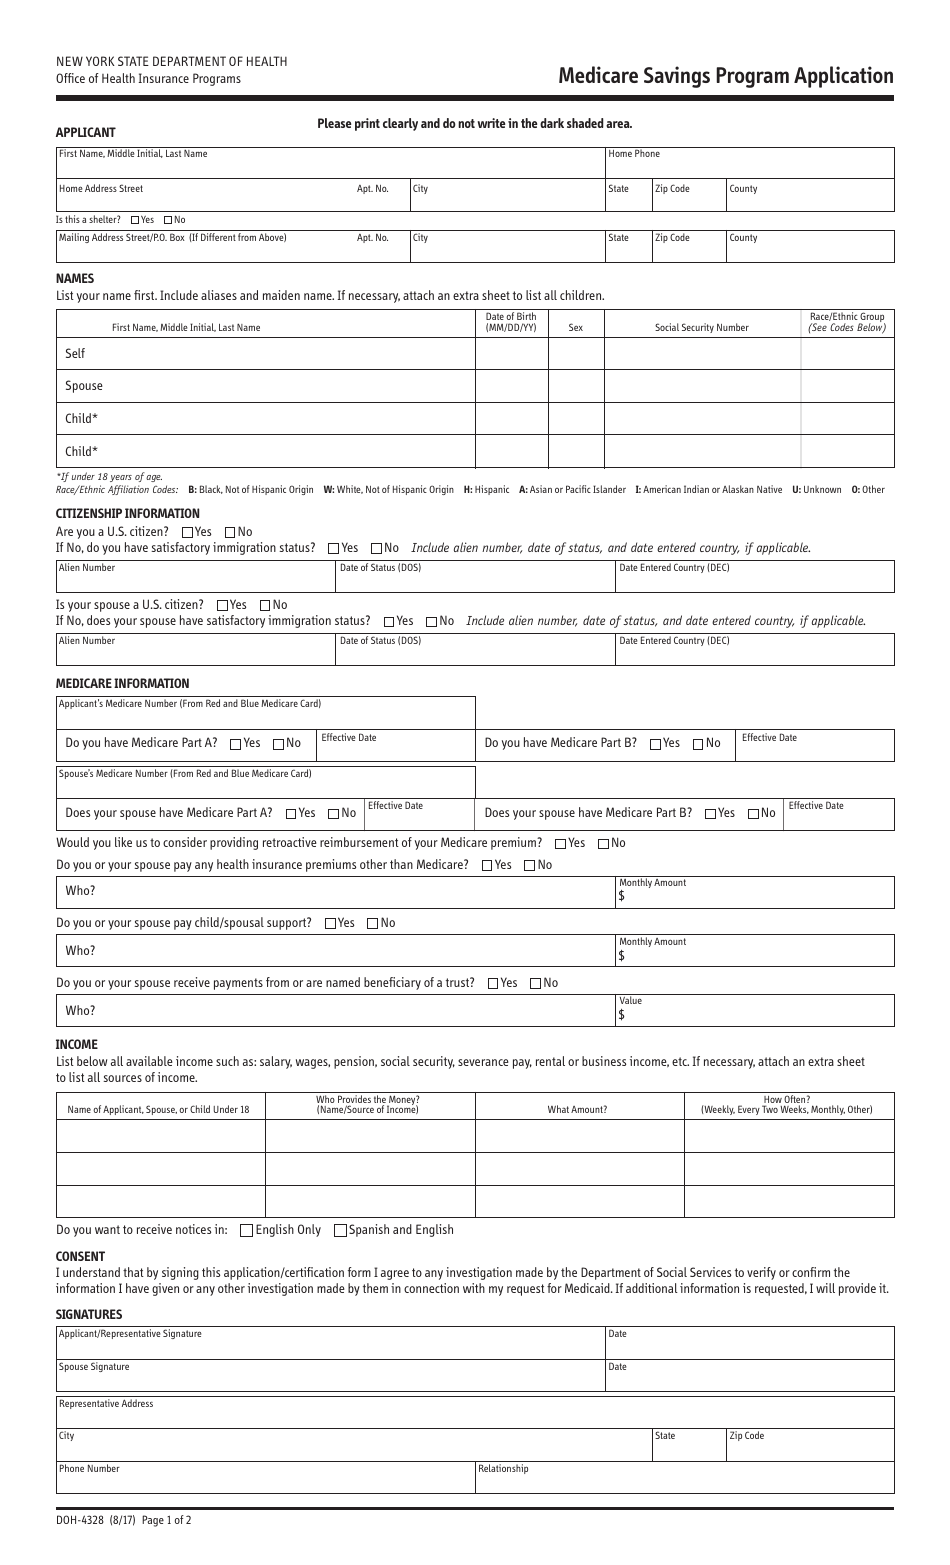 Form DOH-4328 Medicare Savings Program Application - New York, Page 1